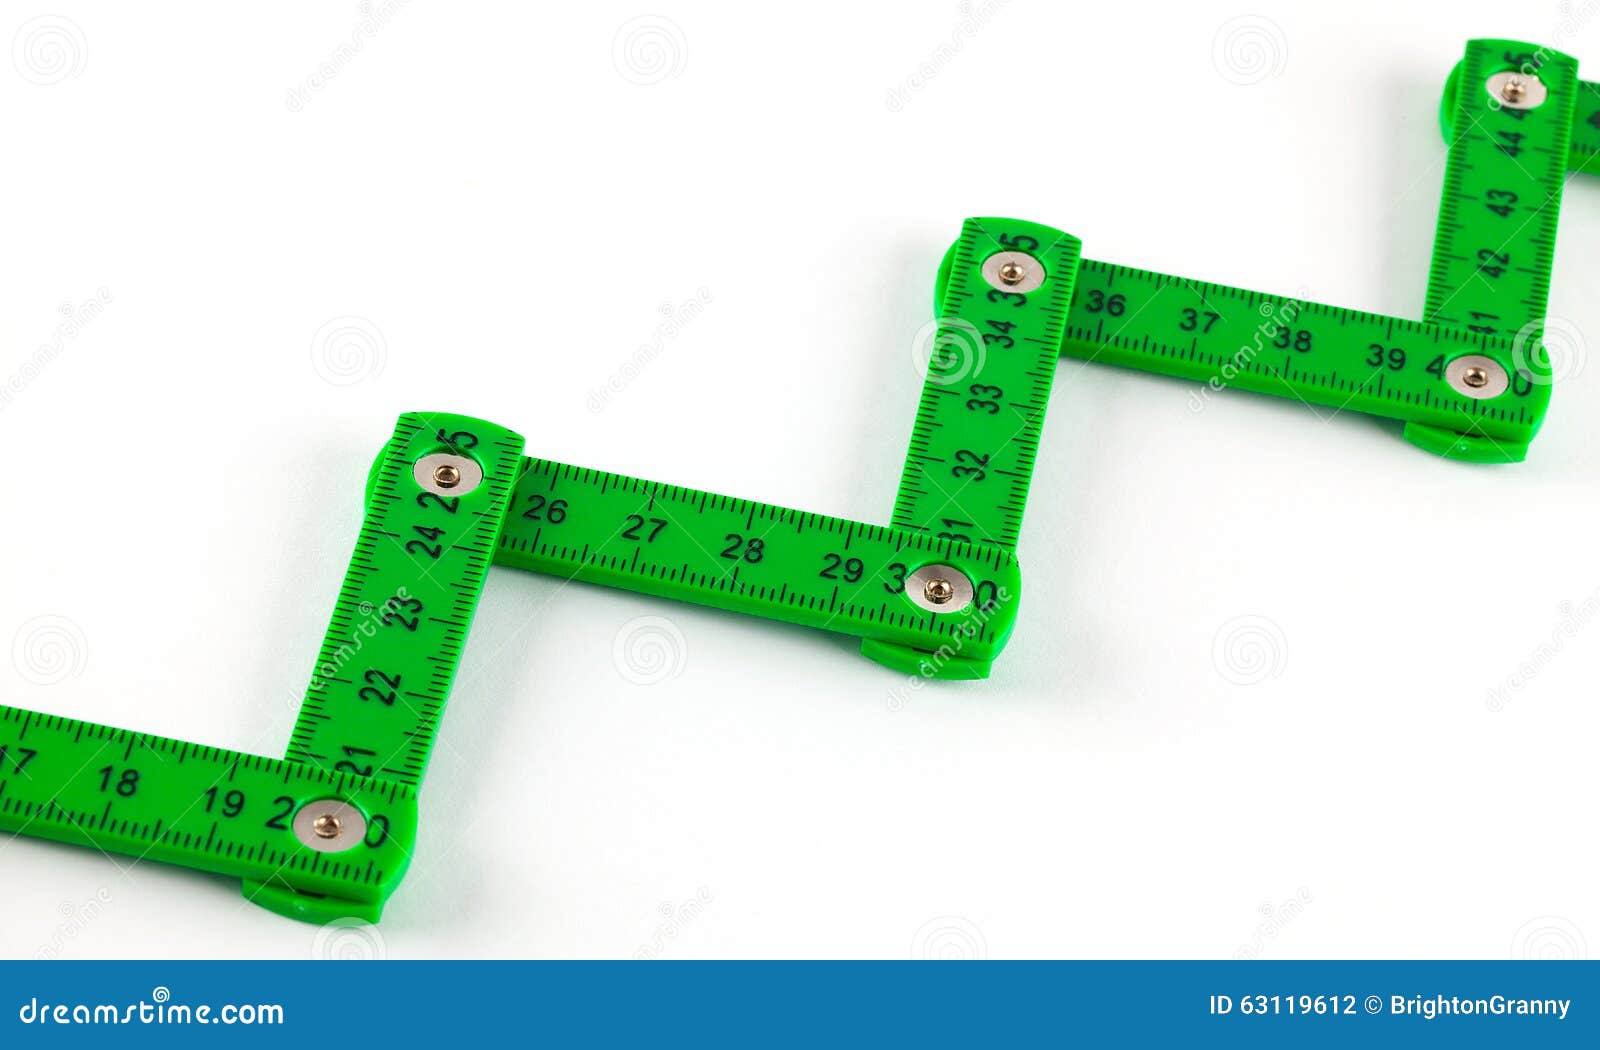 plastic-articulated-ruler-closeup-green-